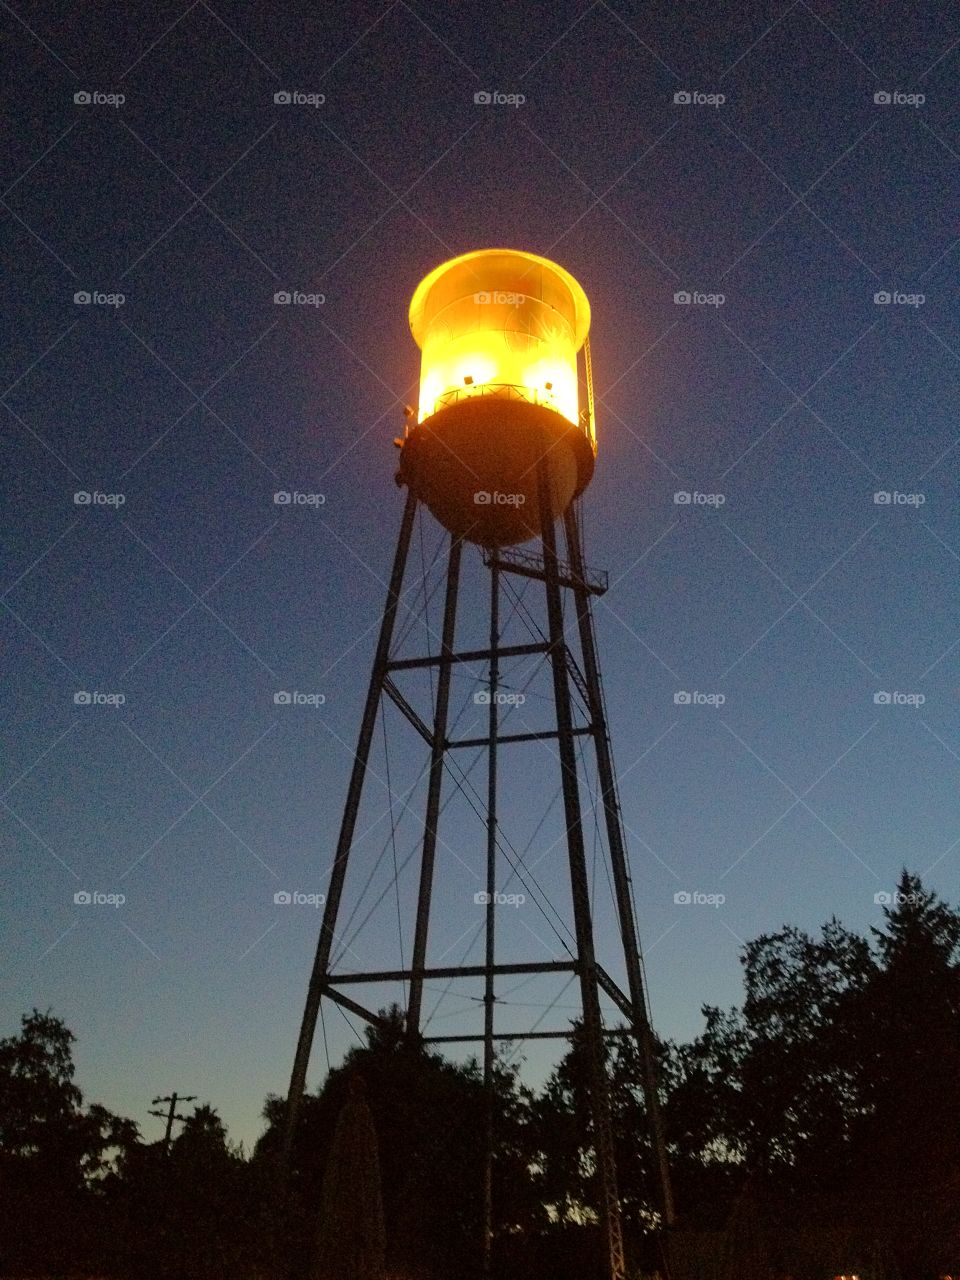 Illuminated water tower at night.. Illuminated water tower at night. iPhone photo